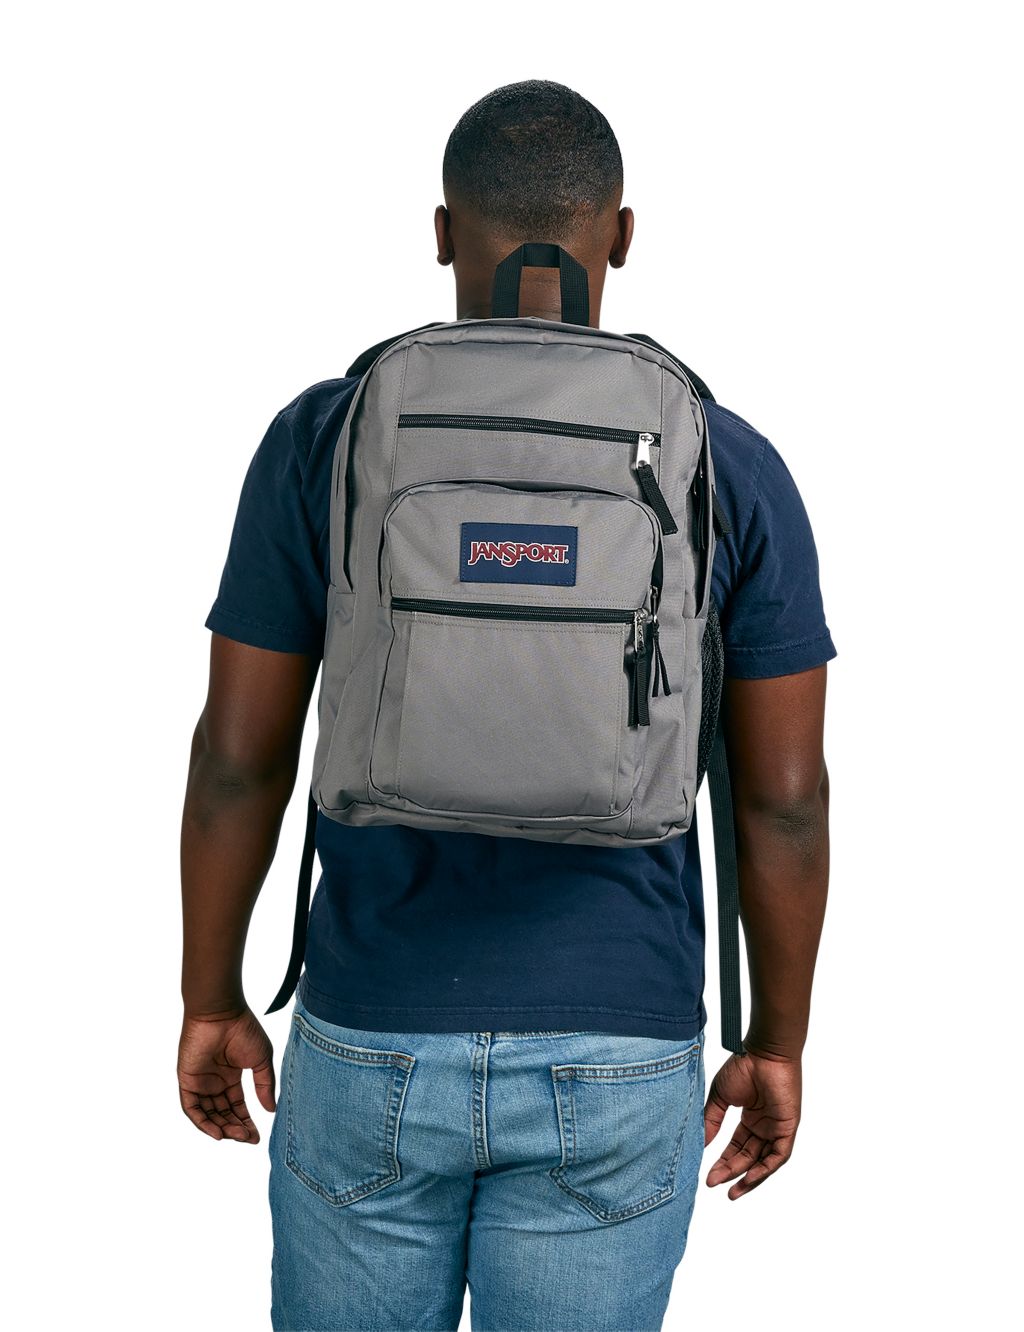 Big Student Backpack image 2